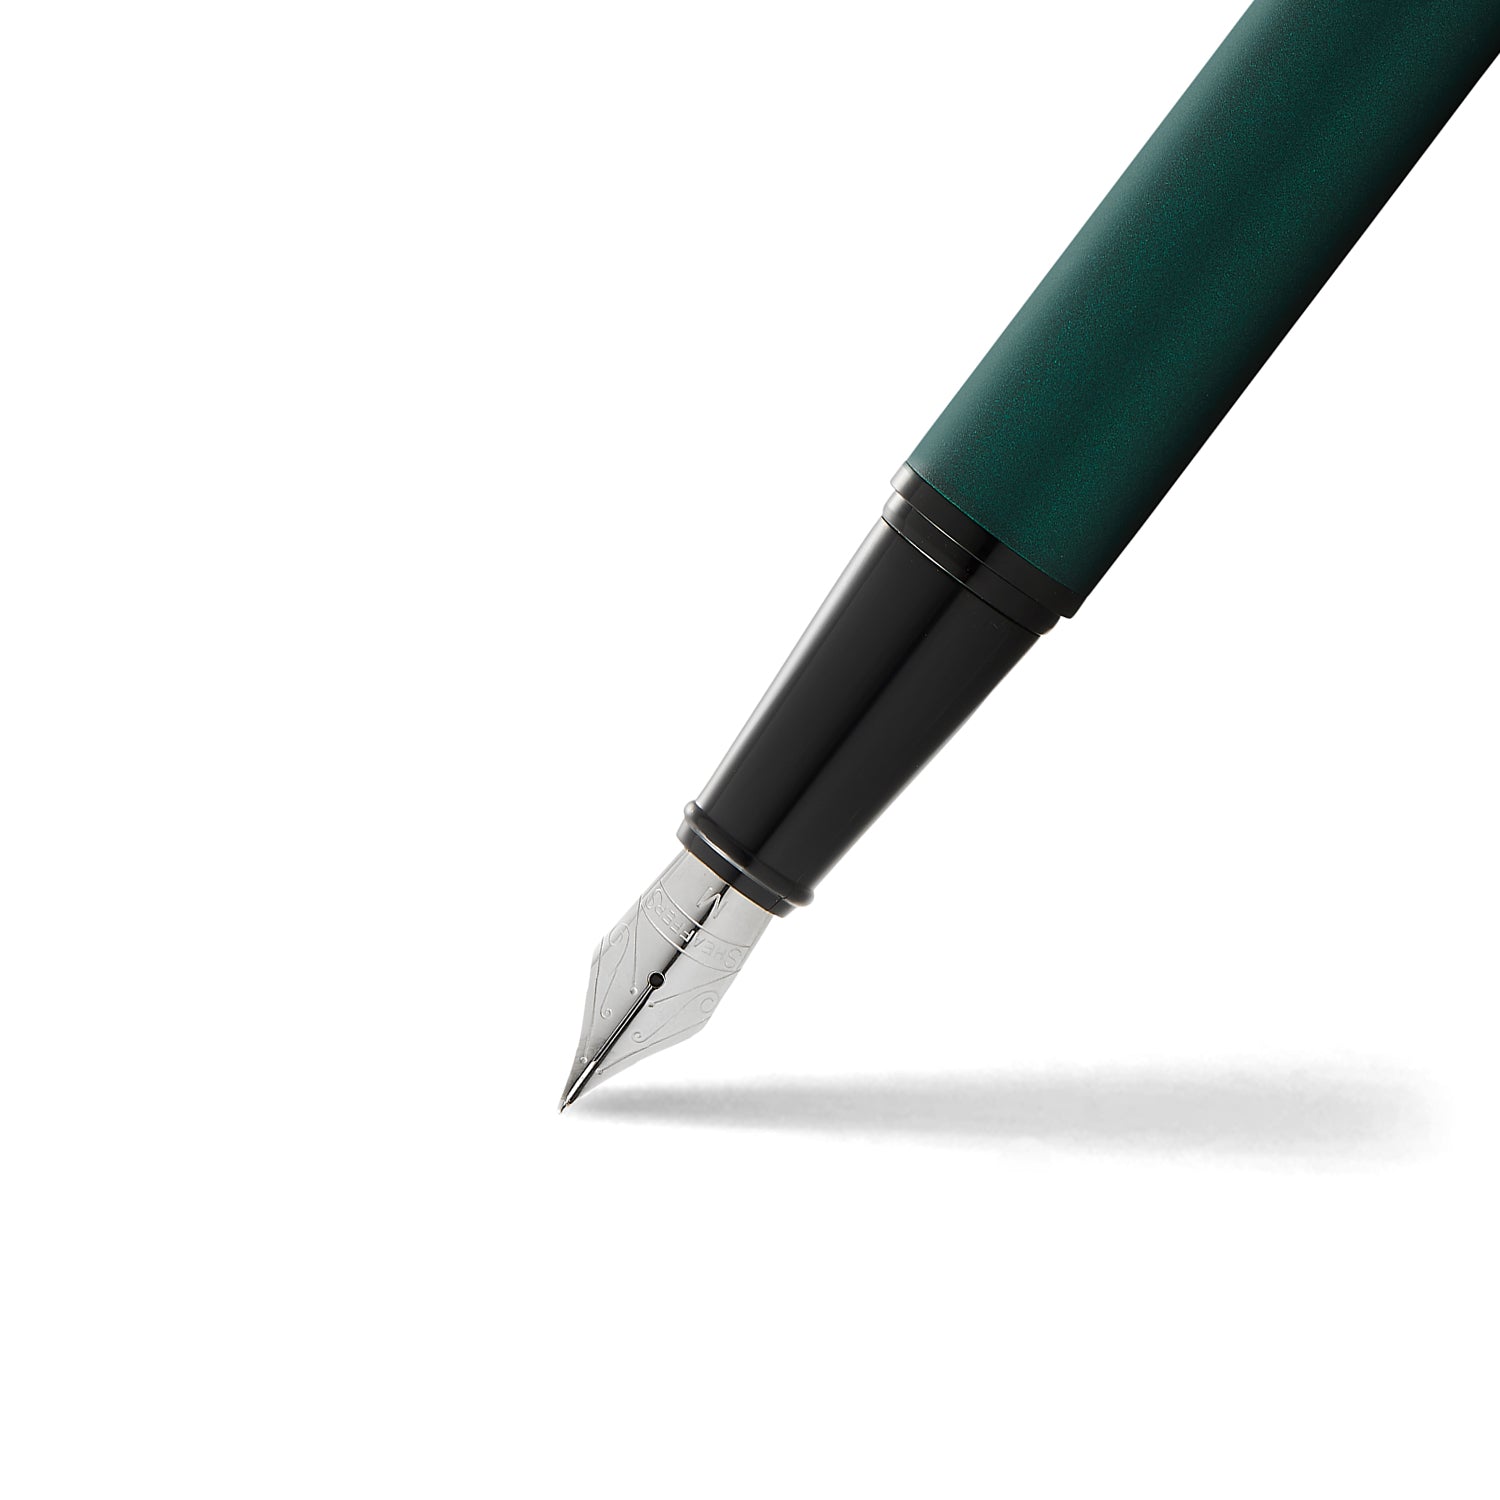 Sheaffer® 300 E9346 Matte Green Fountain Pen With Black Trims - Fine